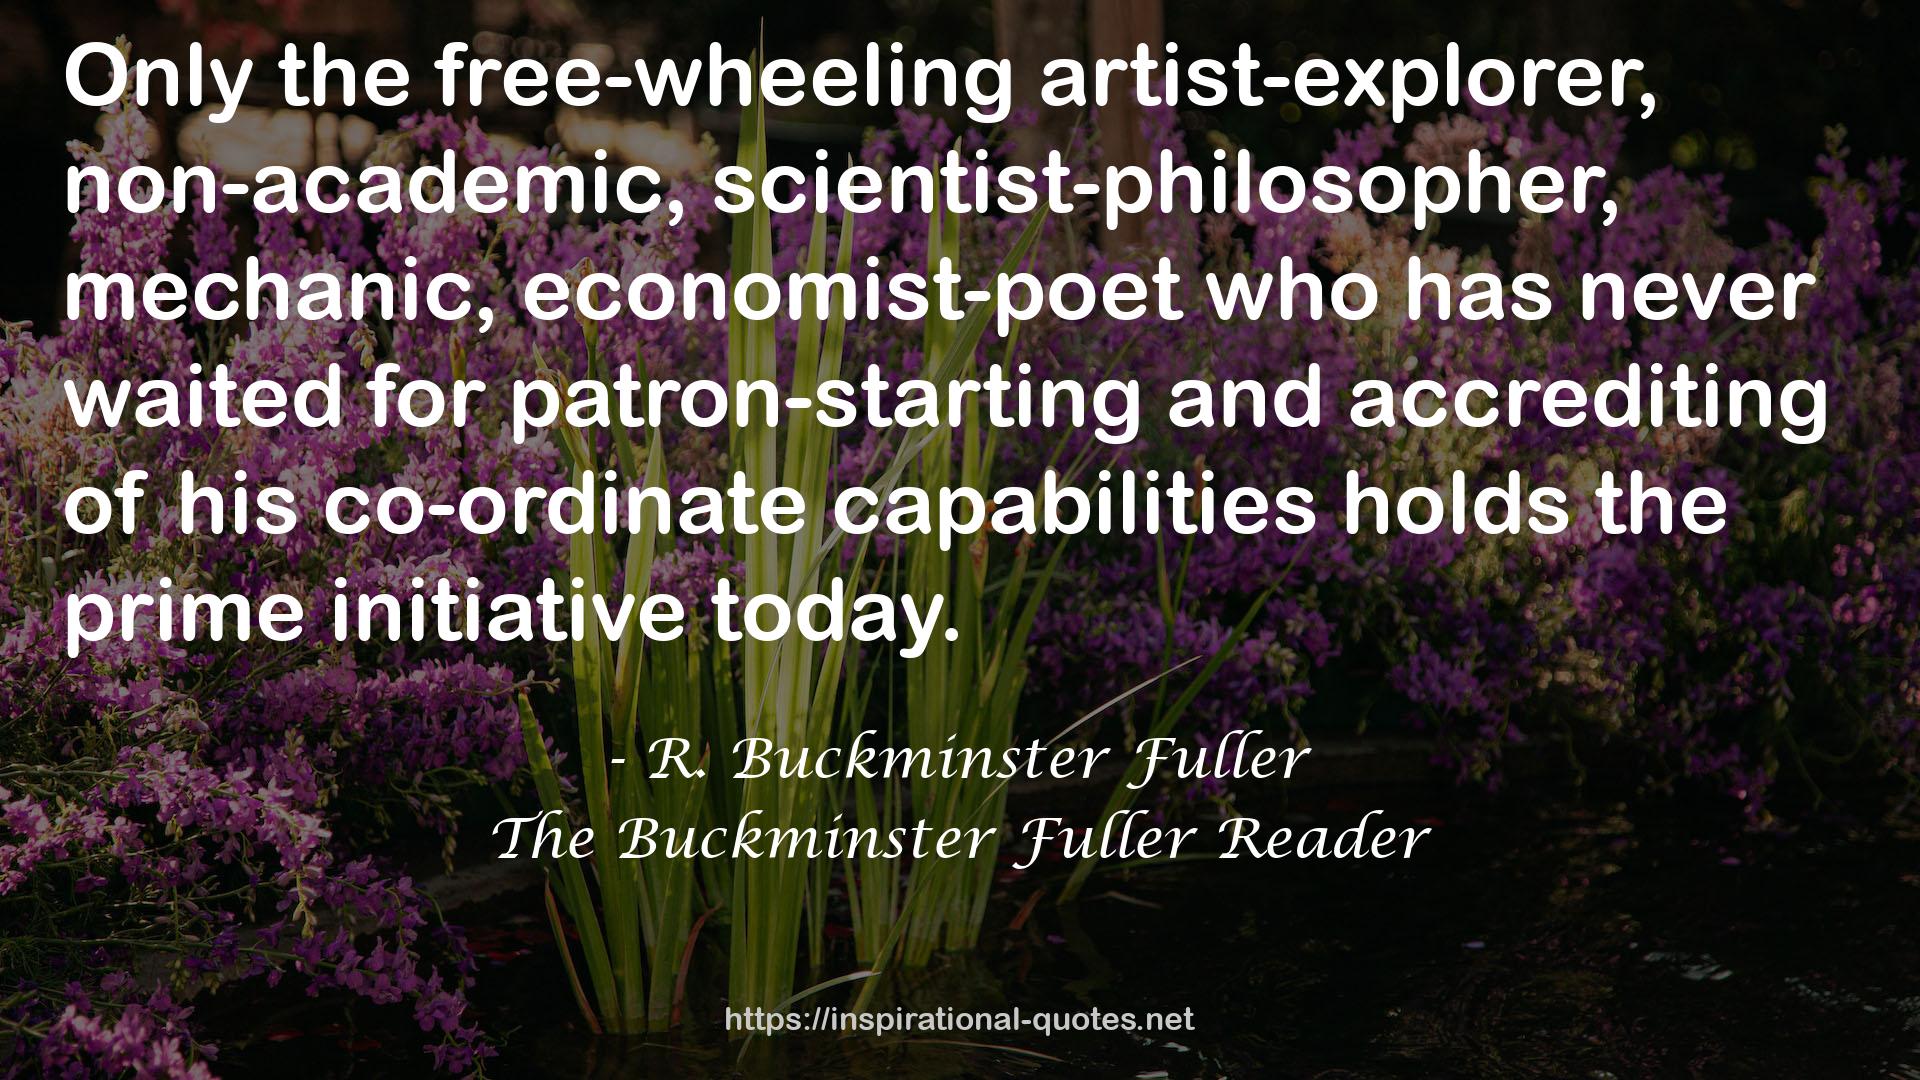 The Buckminster Fuller Reader QUOTES